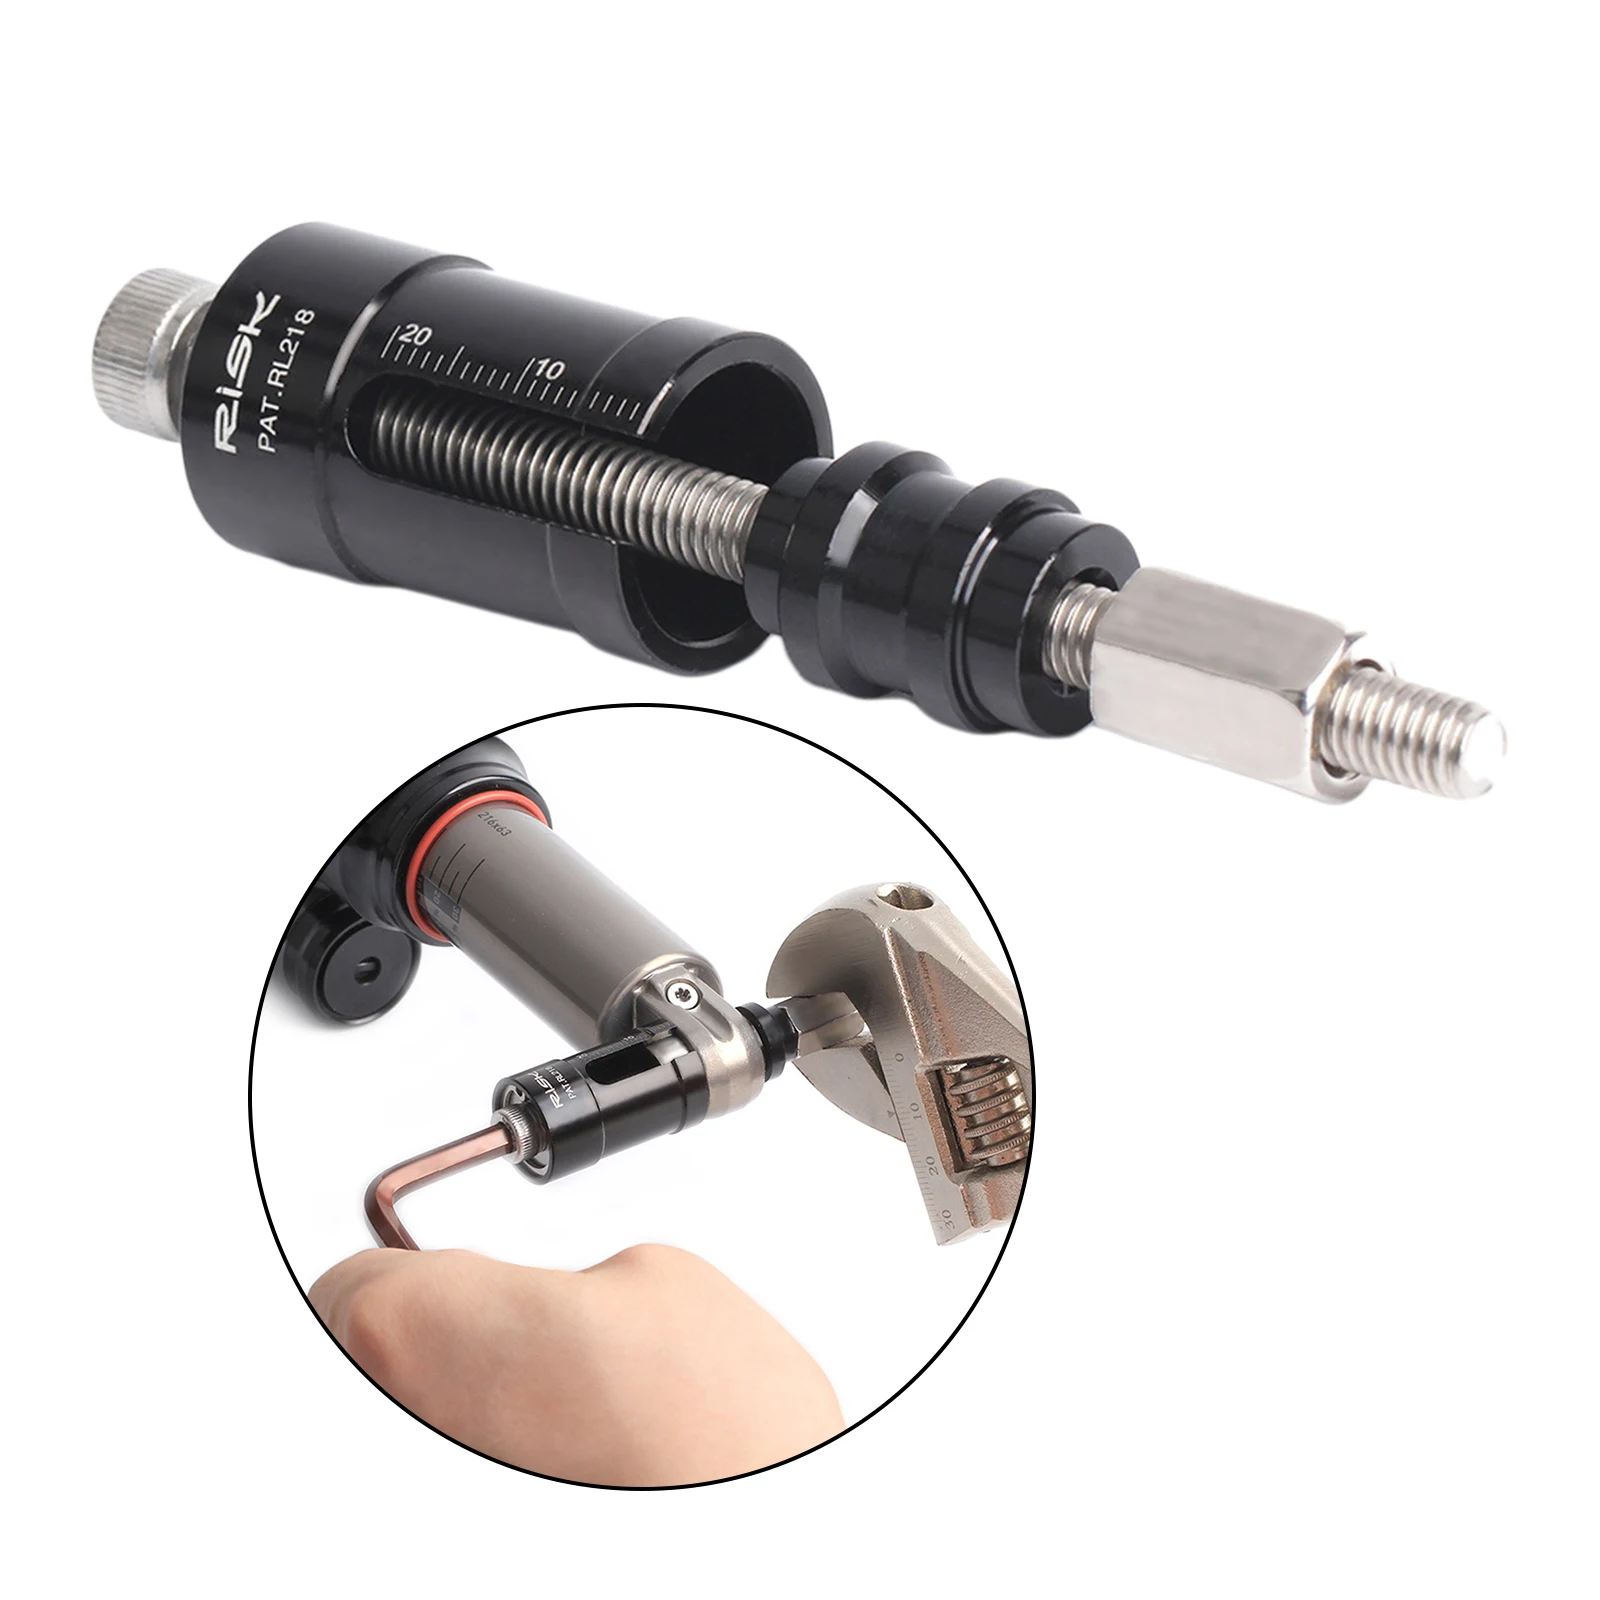 MTB Bike Rear Shock Bushing Tool Press-in Removal Install Repair Disassembly Tool Bicycle Maintenance